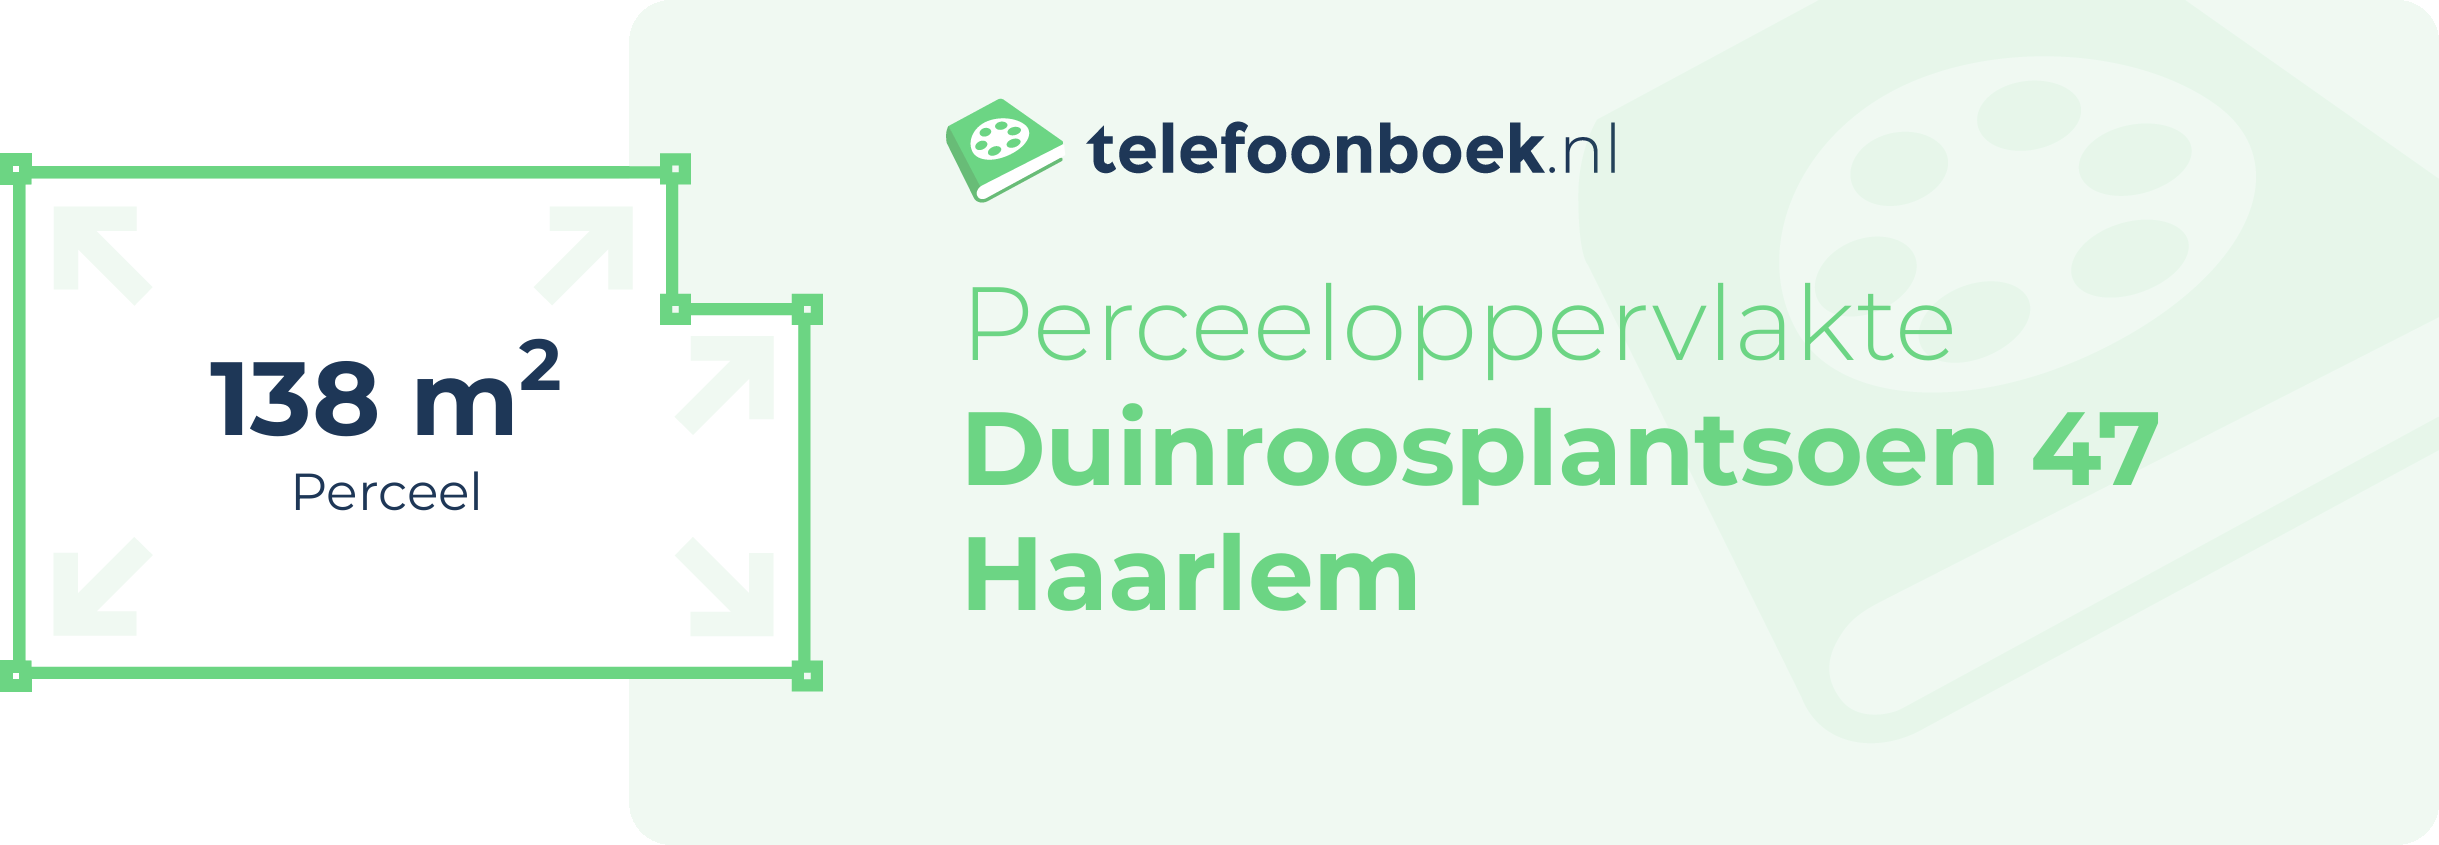 Perceeloppervlakte Duinroosplantsoen 47 Haarlem